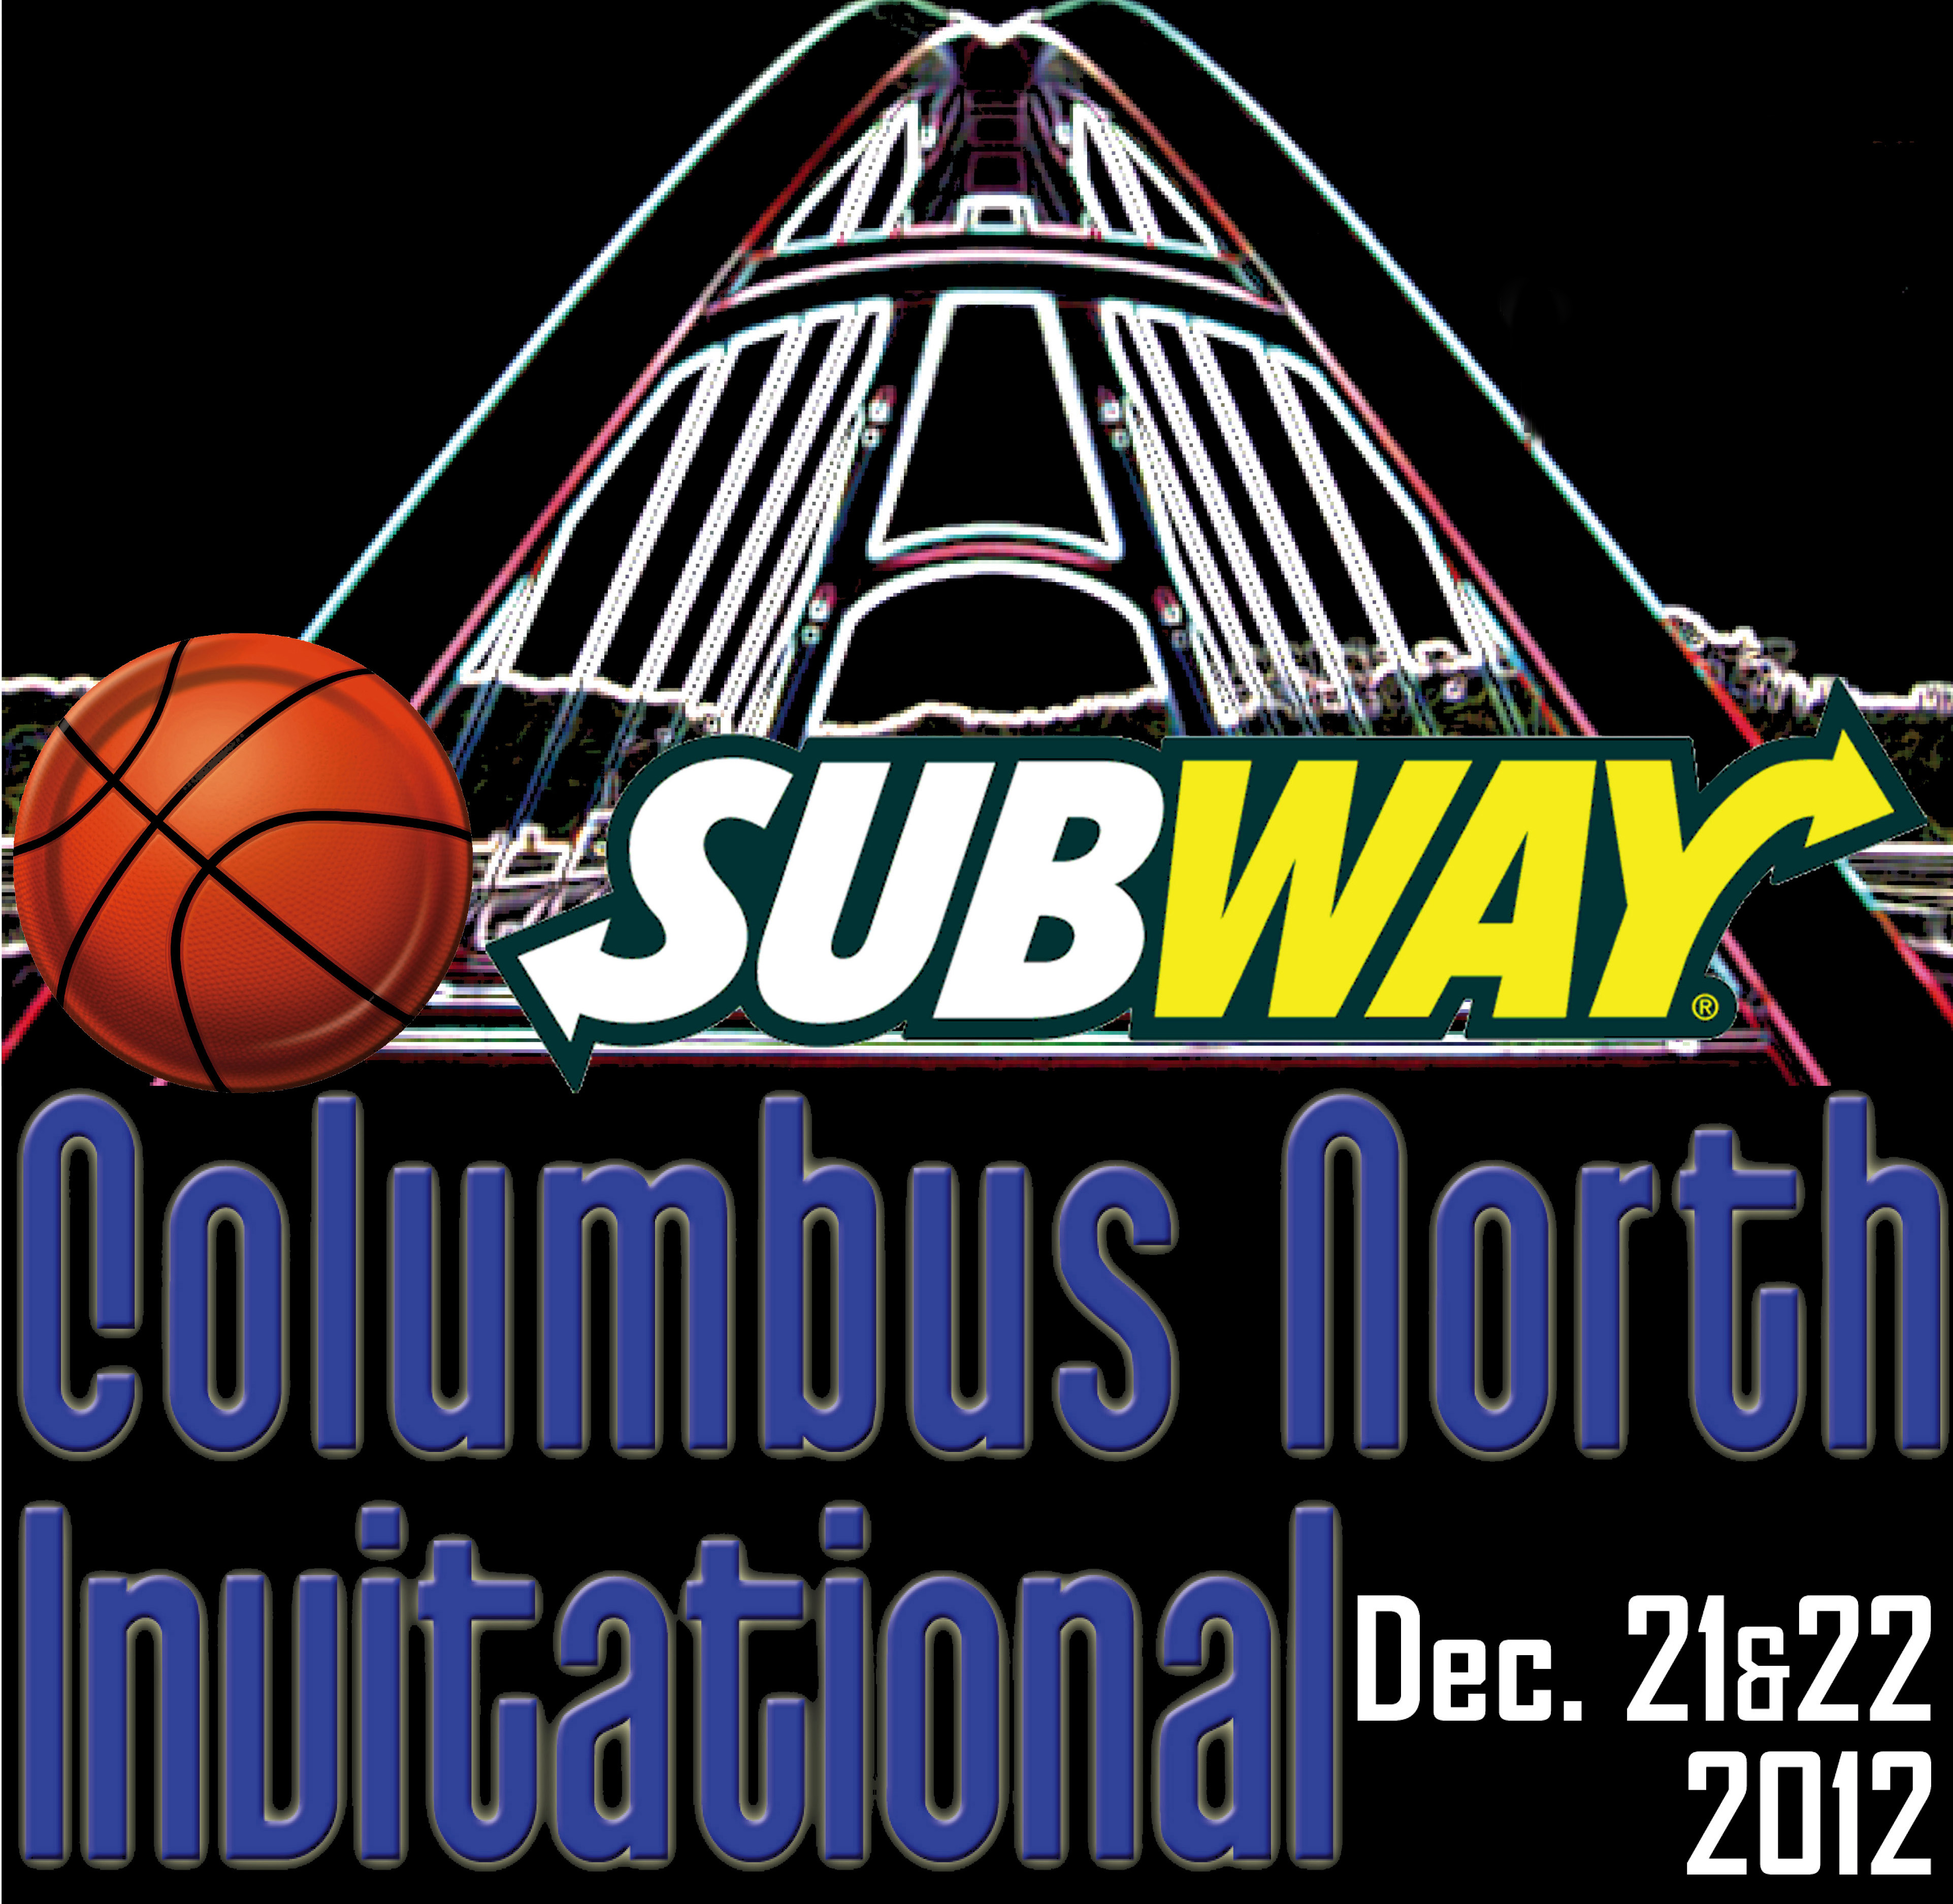 2012 Columbus North/Subway Invitational